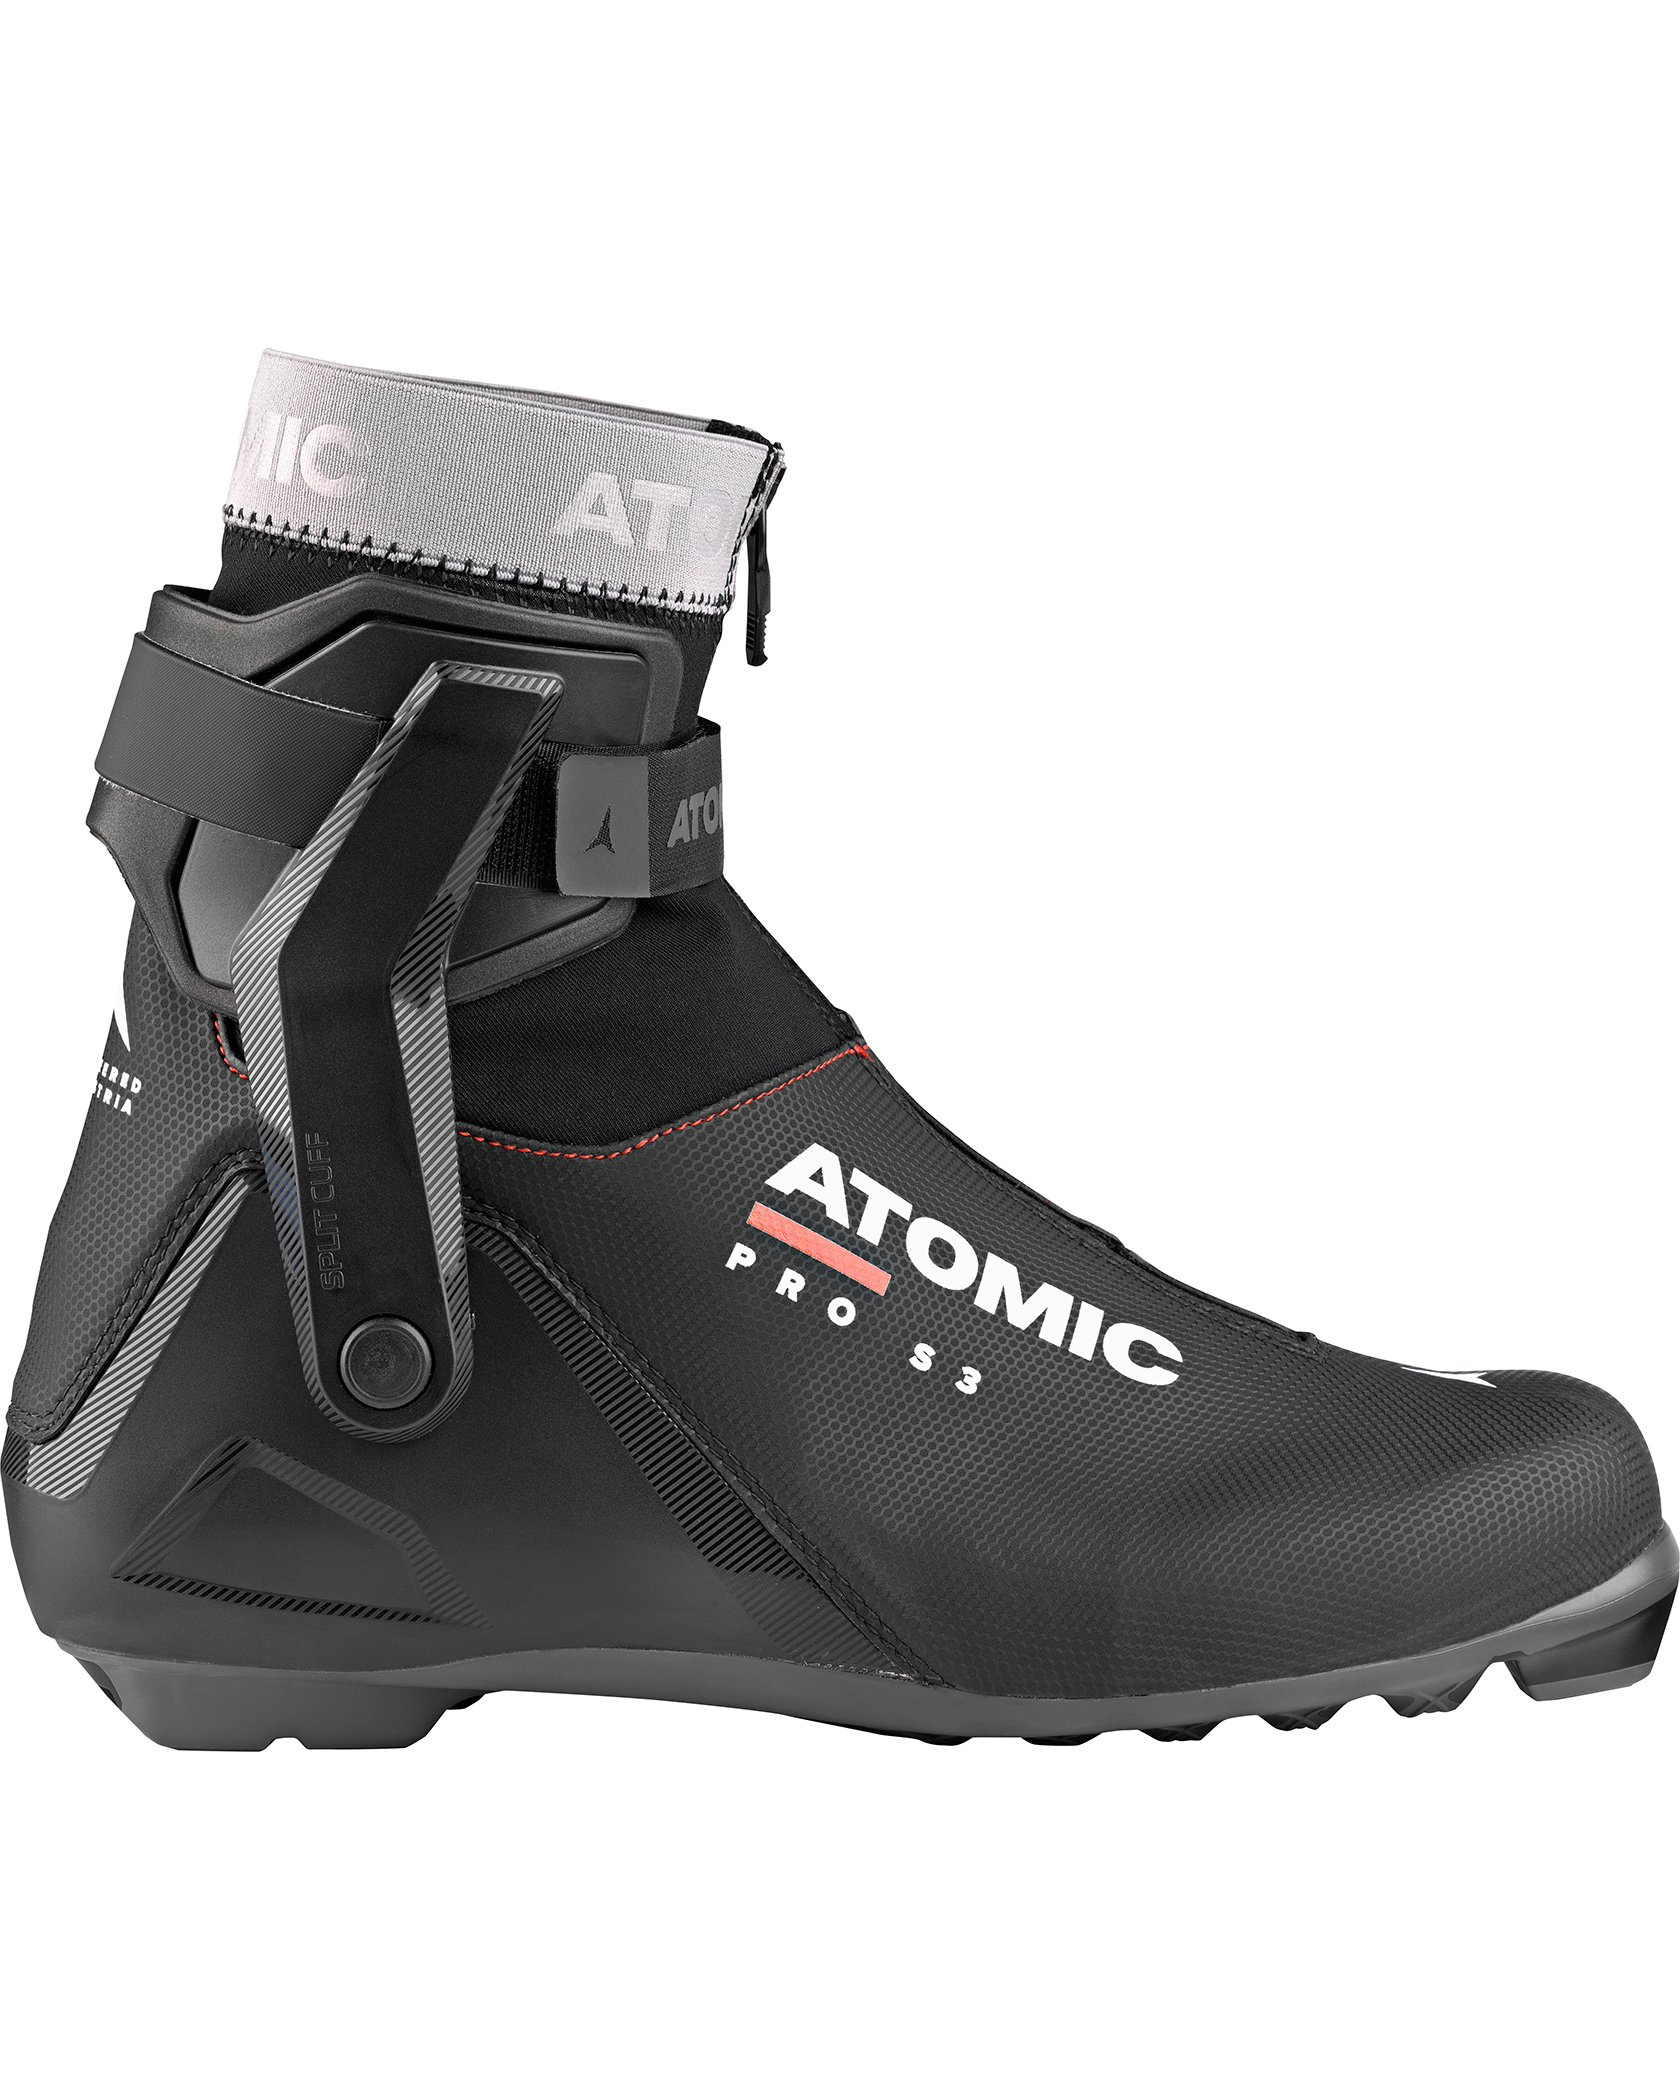 Atomic Pro S3 Dark Grey/Black (Storlek 7.5 UK)